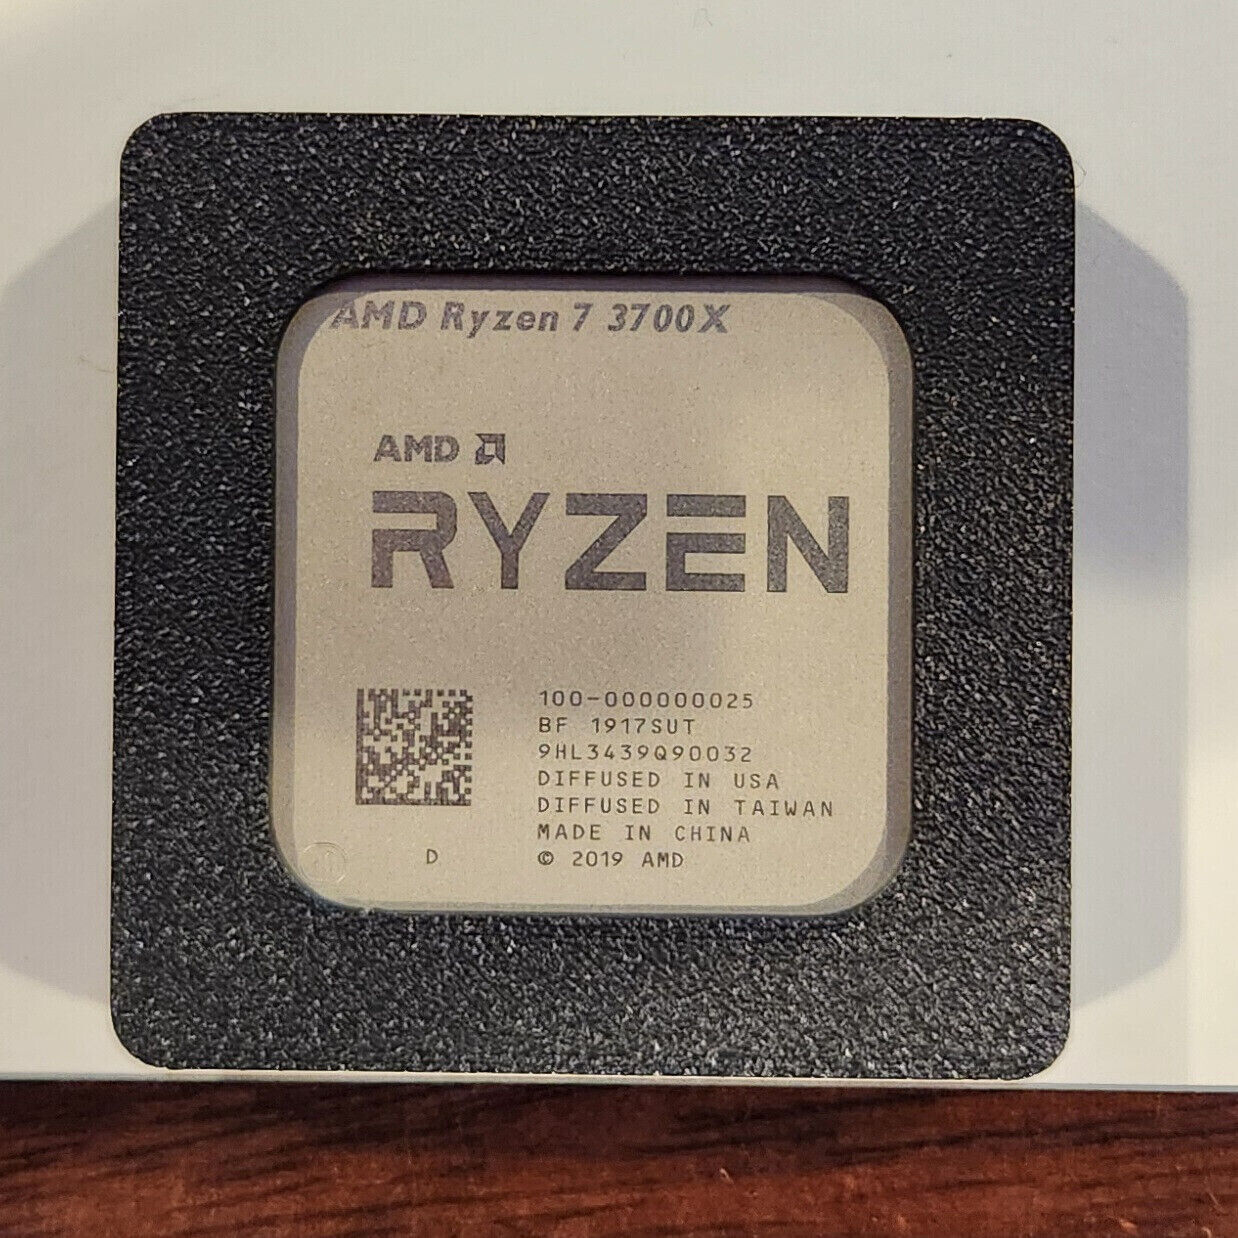 AMD Ryzen 7 3700X 3.6GHz 8 Core, 16 Thread, AM4, Zen2, Processor 100-000000025